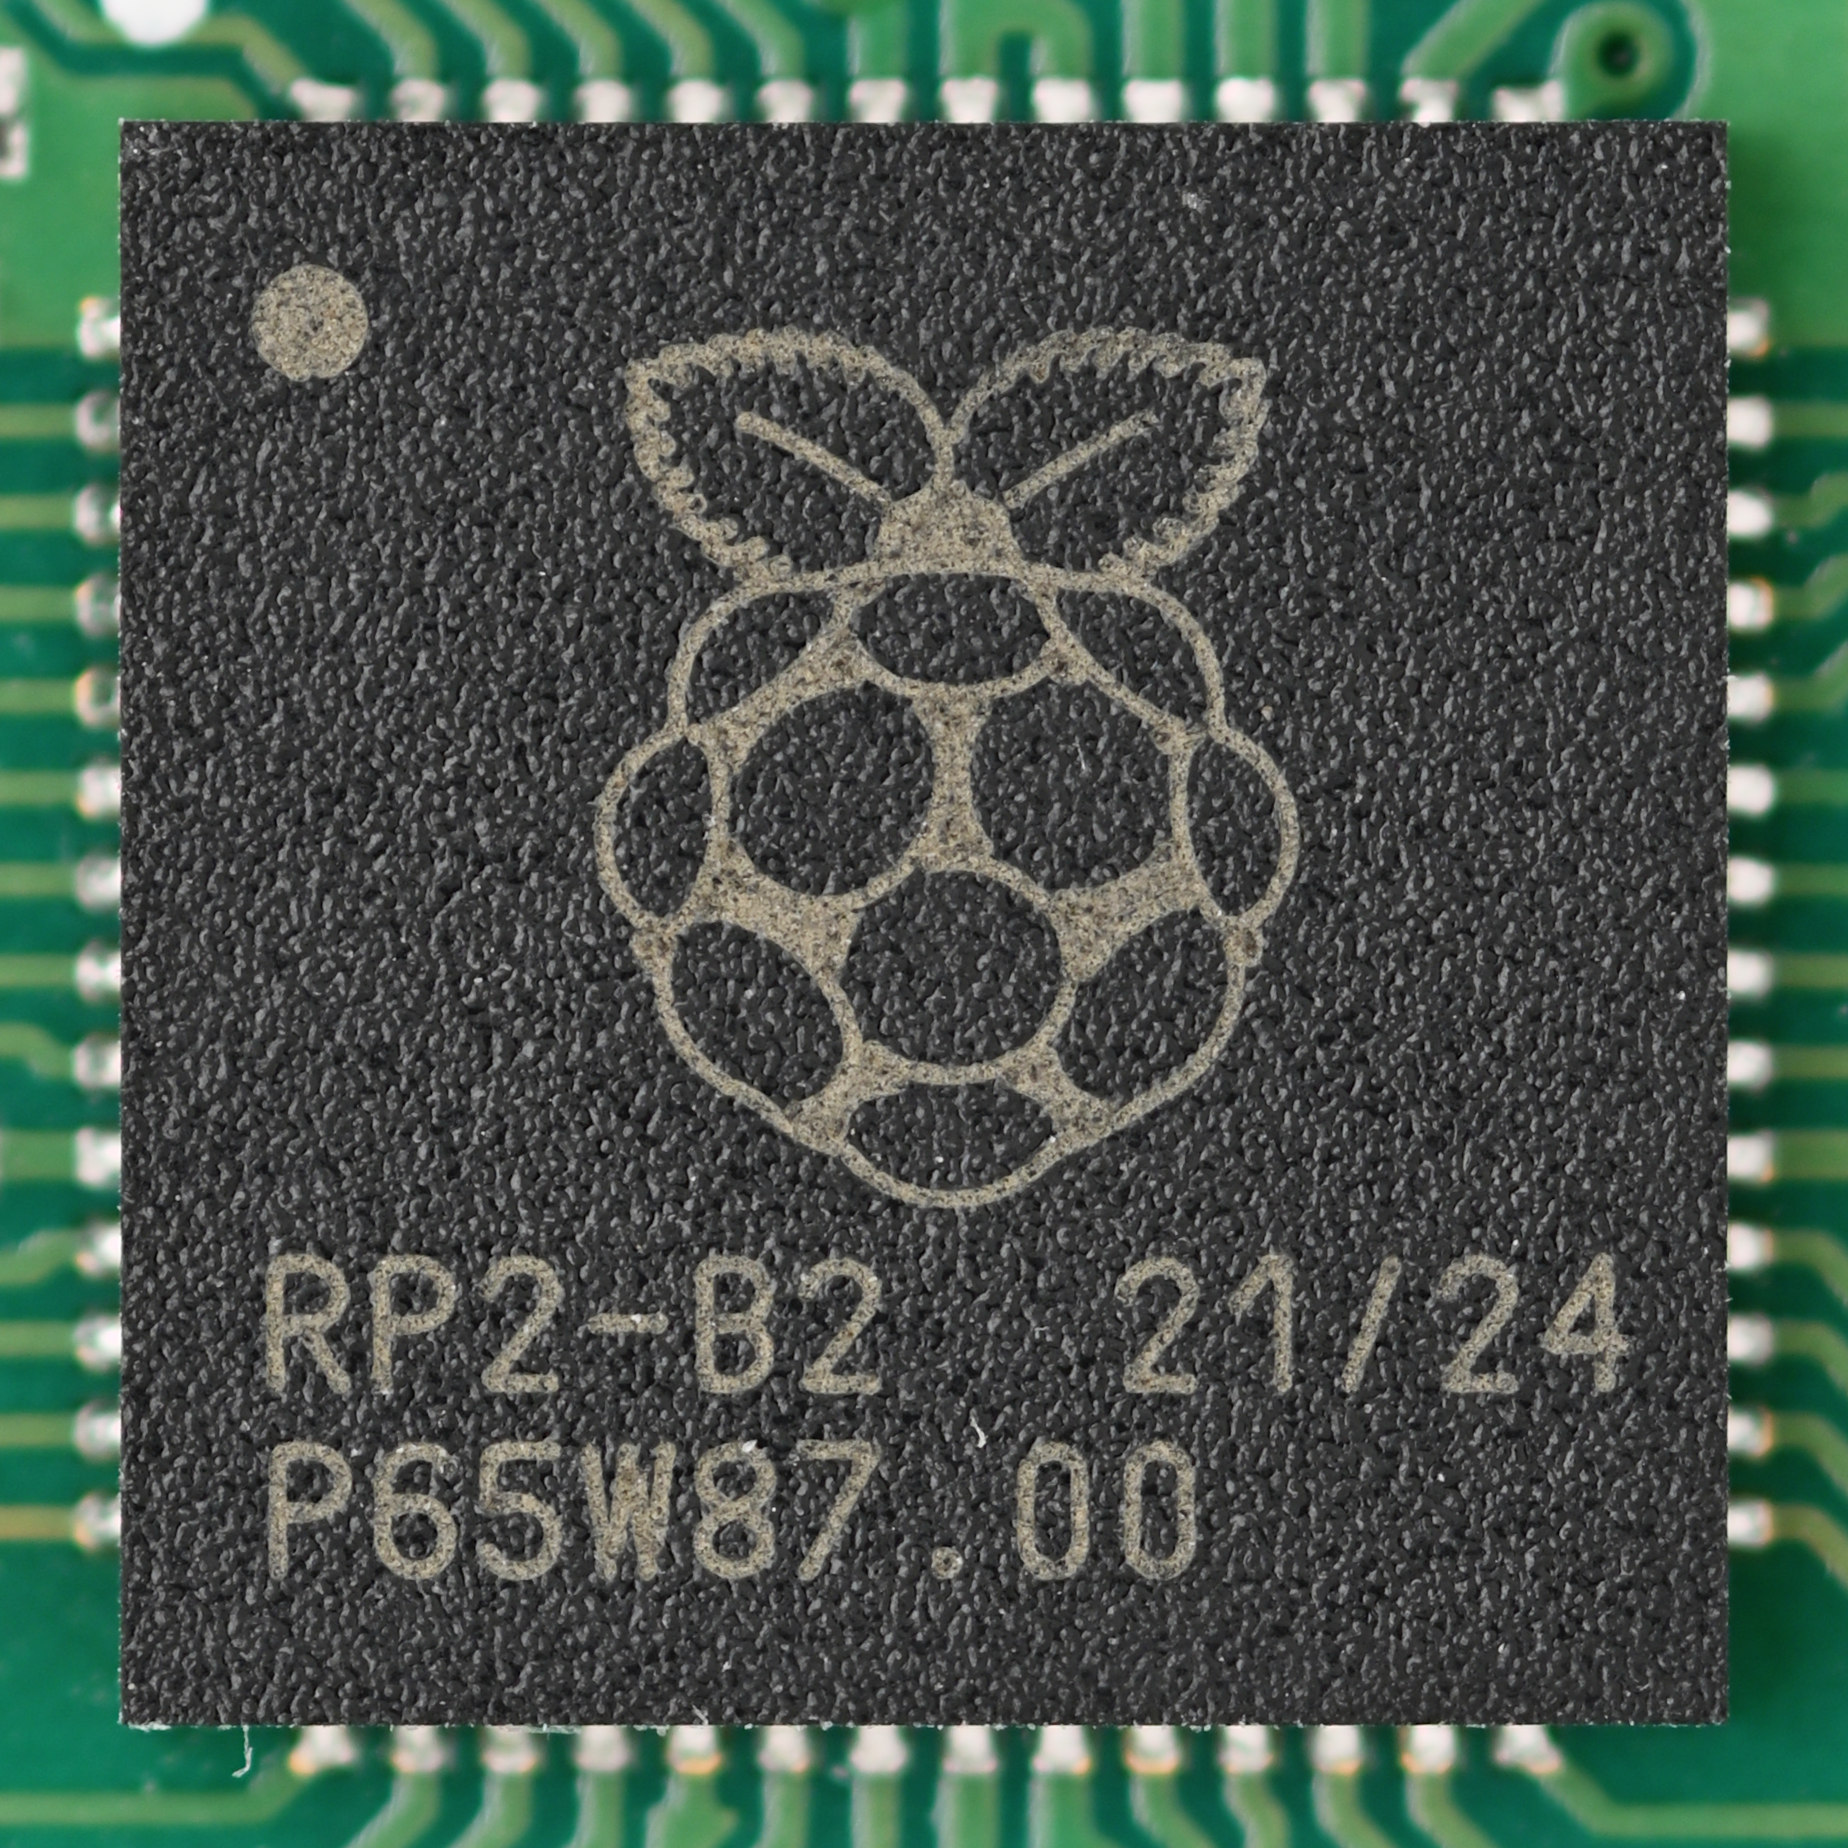 Raspberry Pi Documentation - RP2040